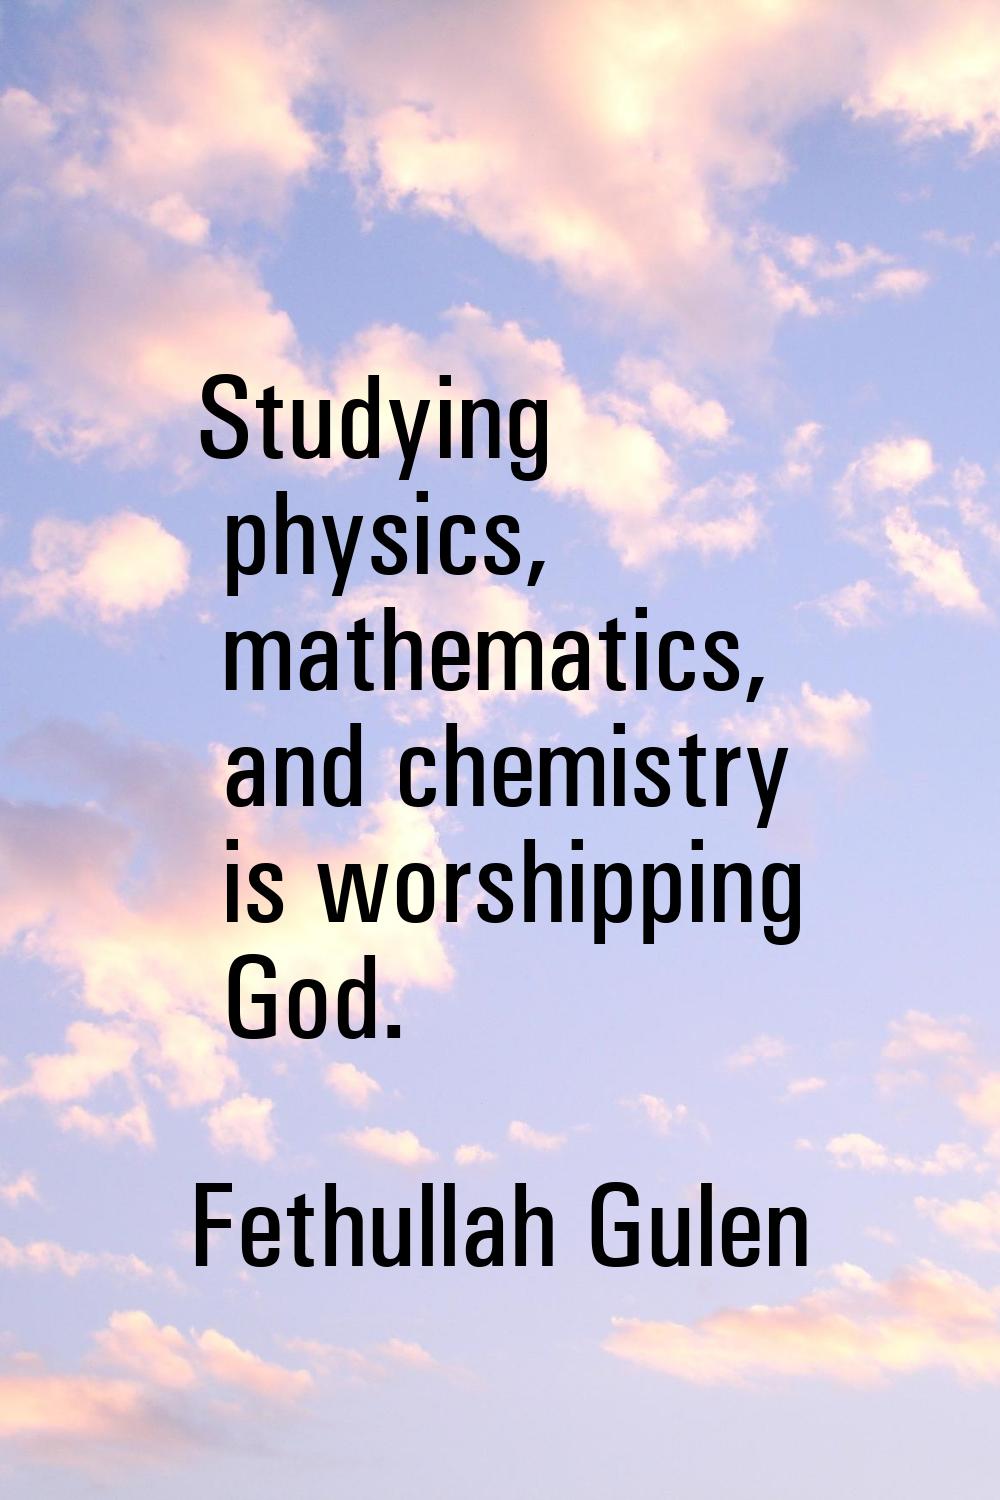 Studying physics, mathematics, and chemistry is worshipping God.